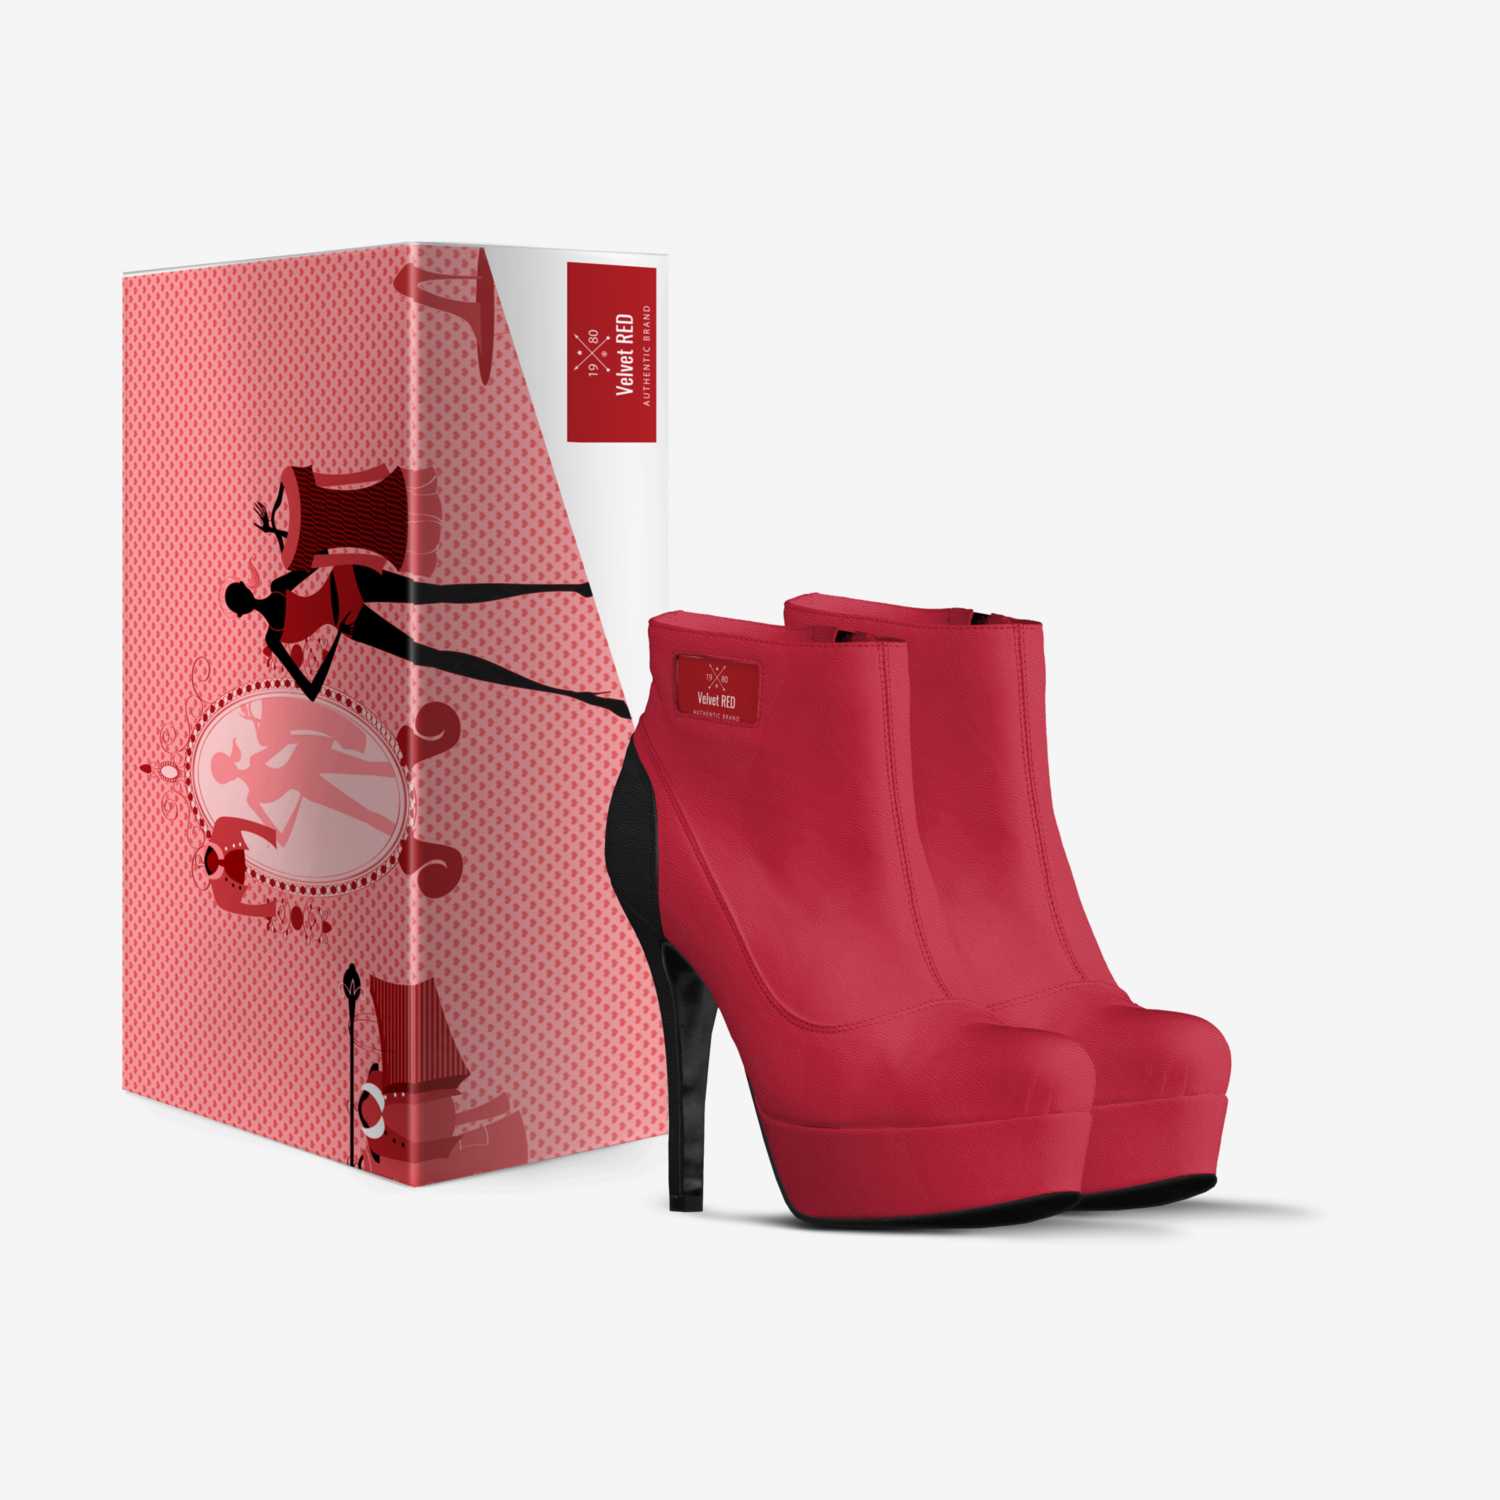 Velvet RED custom made in Italy shoes by Shantae Esannason | Box view